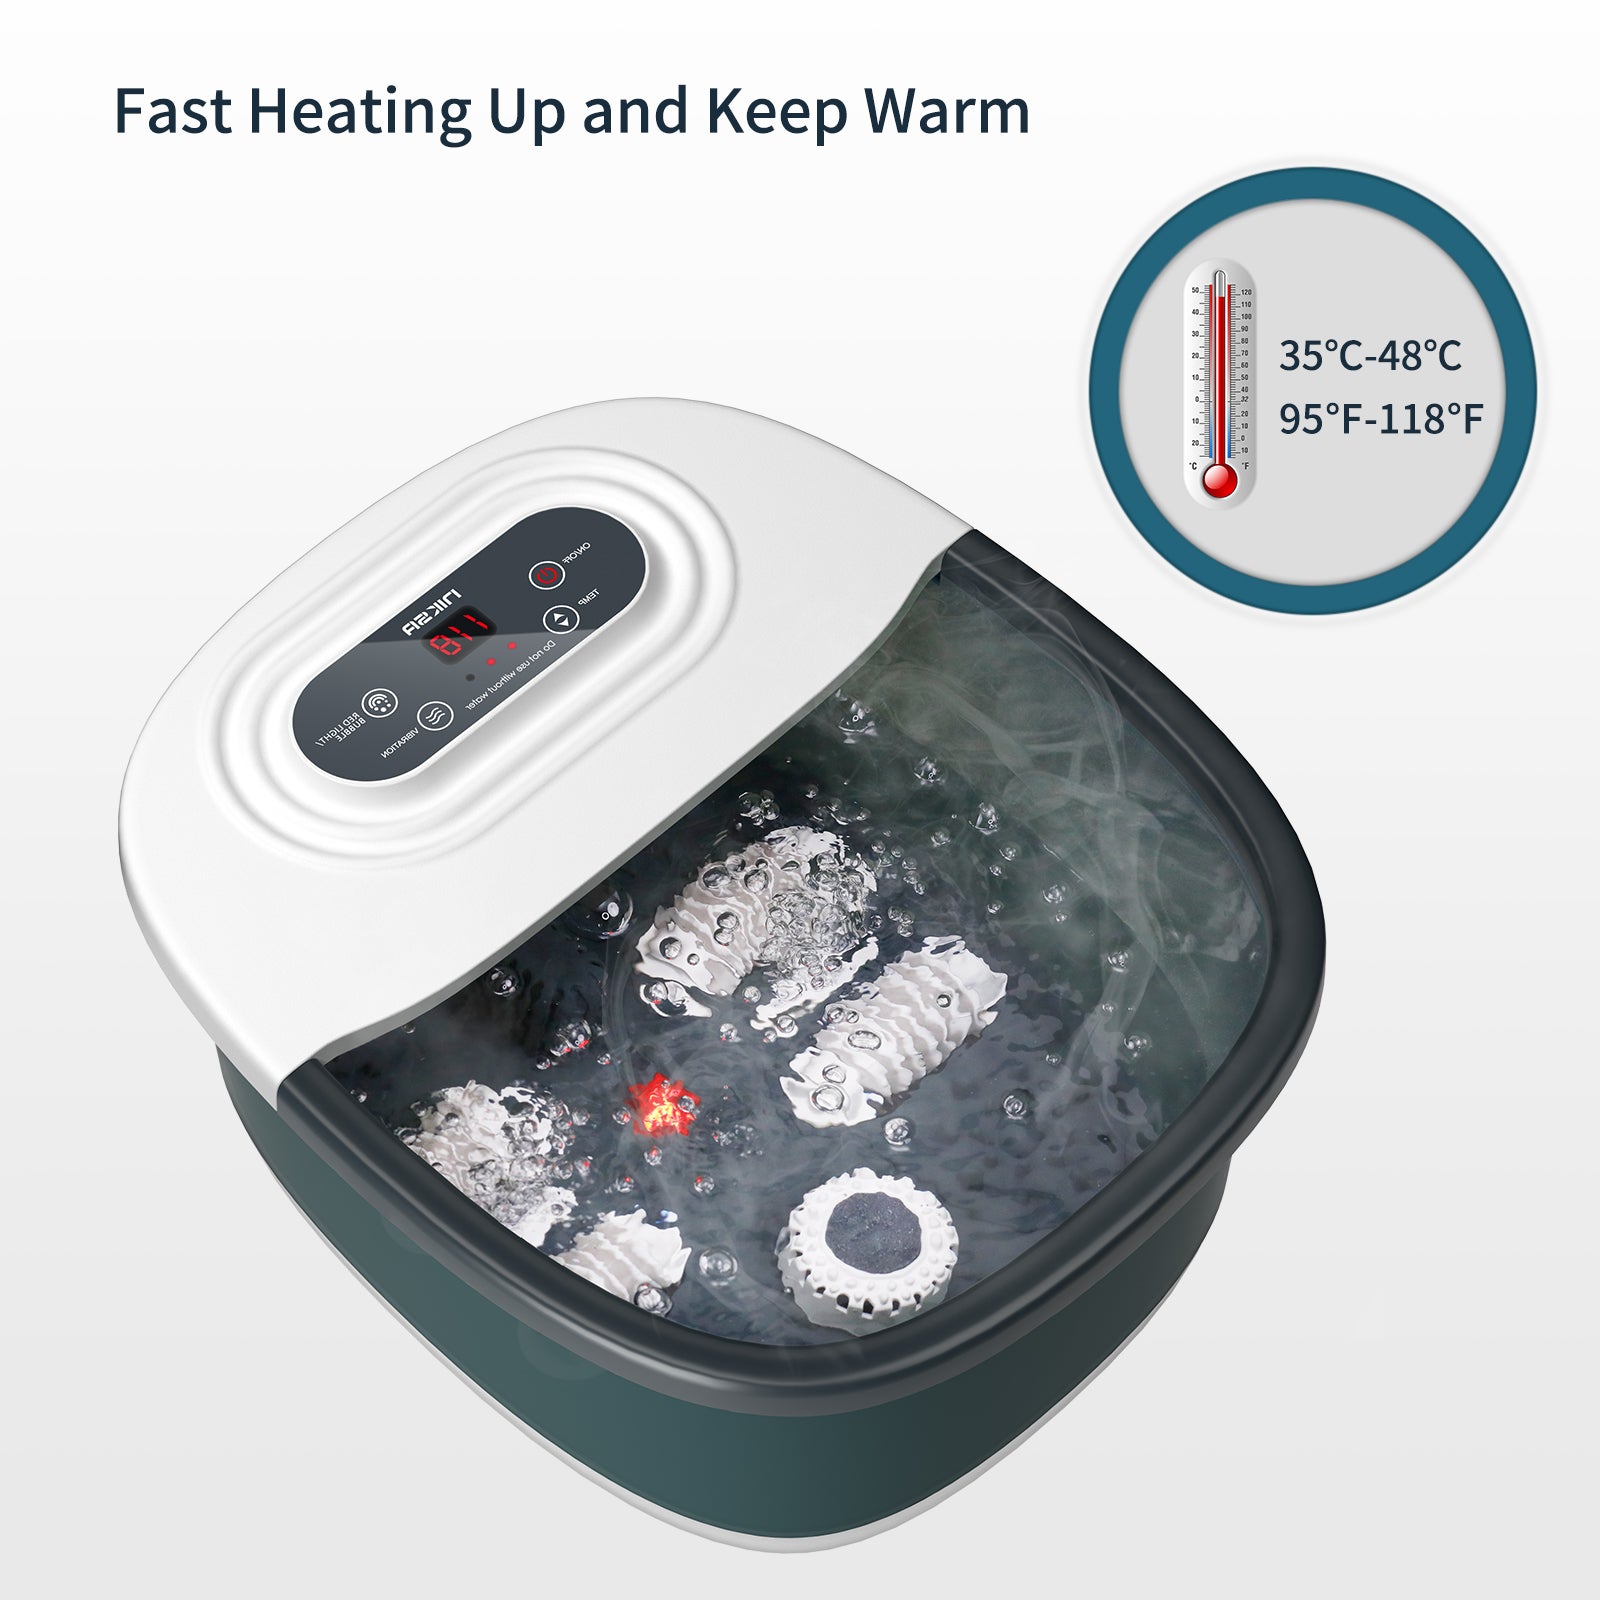 Niksa foot spa bath massager heating up and keep warm